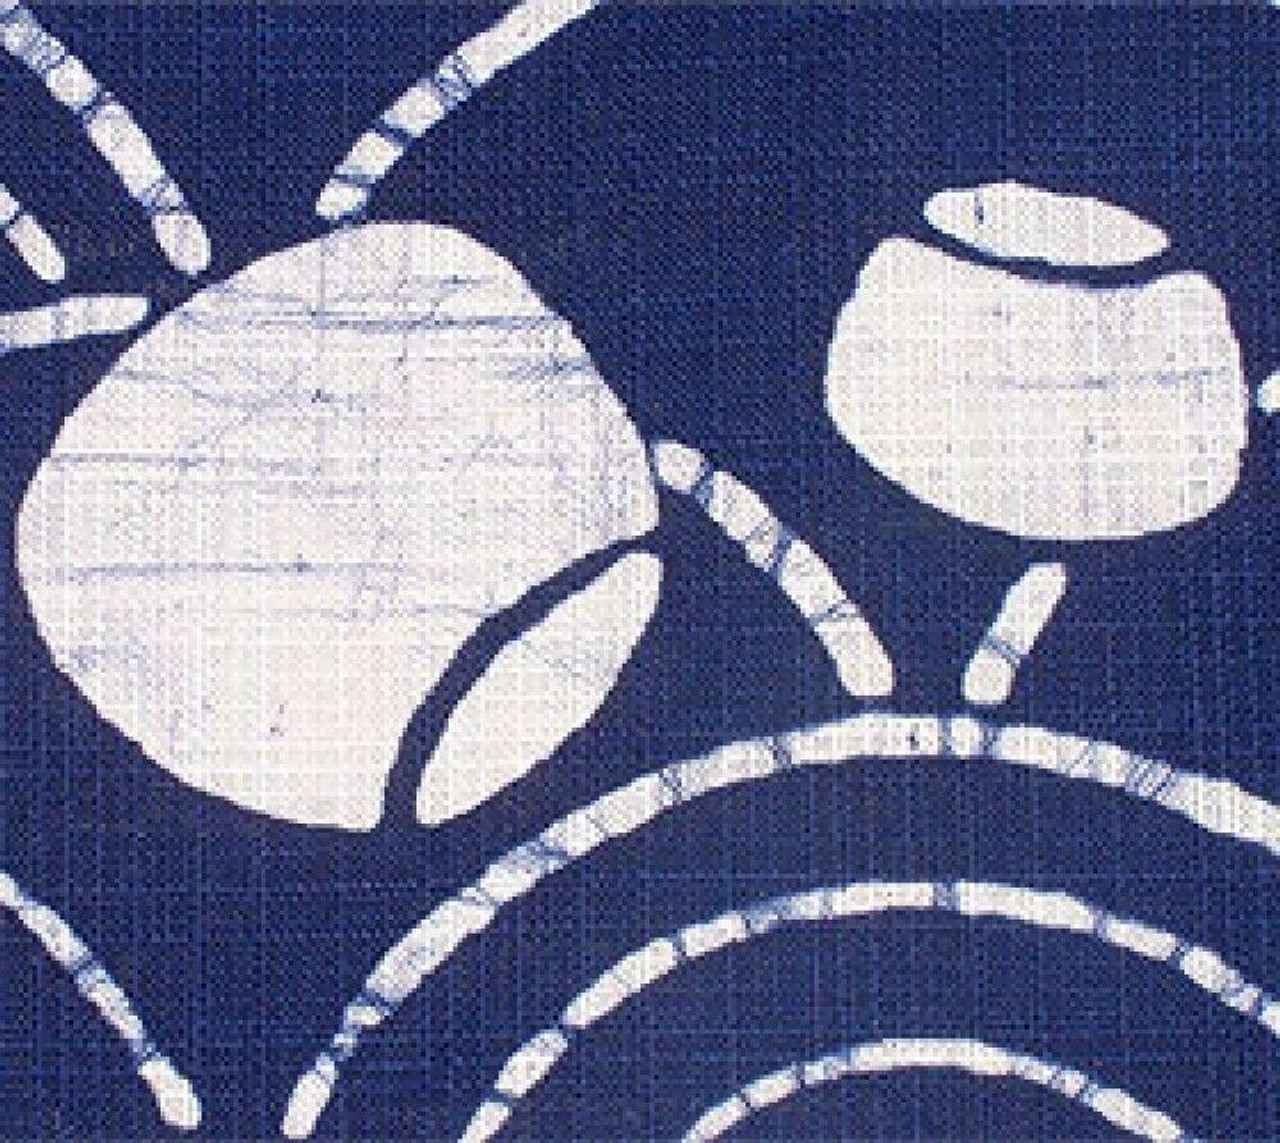 Kyoto Nami Wave Pattern Noren Door curtain Roketsu dye Blue Navy Japan